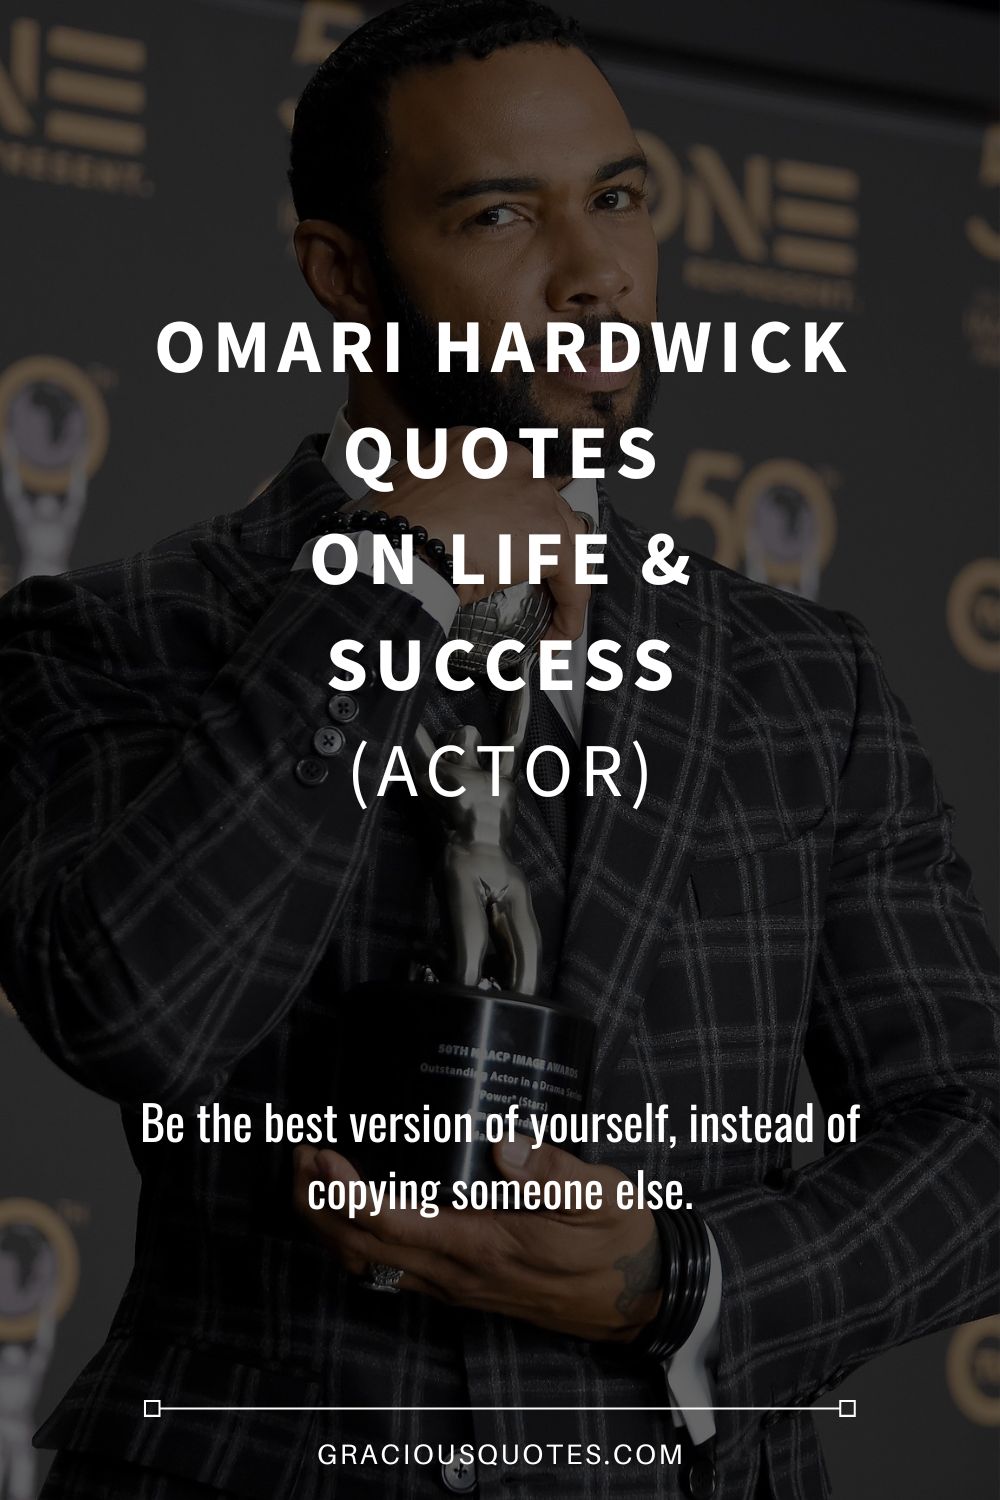 Omari Hardwick Quotes on Life & Success (ACTOR) - Gracious Quotes